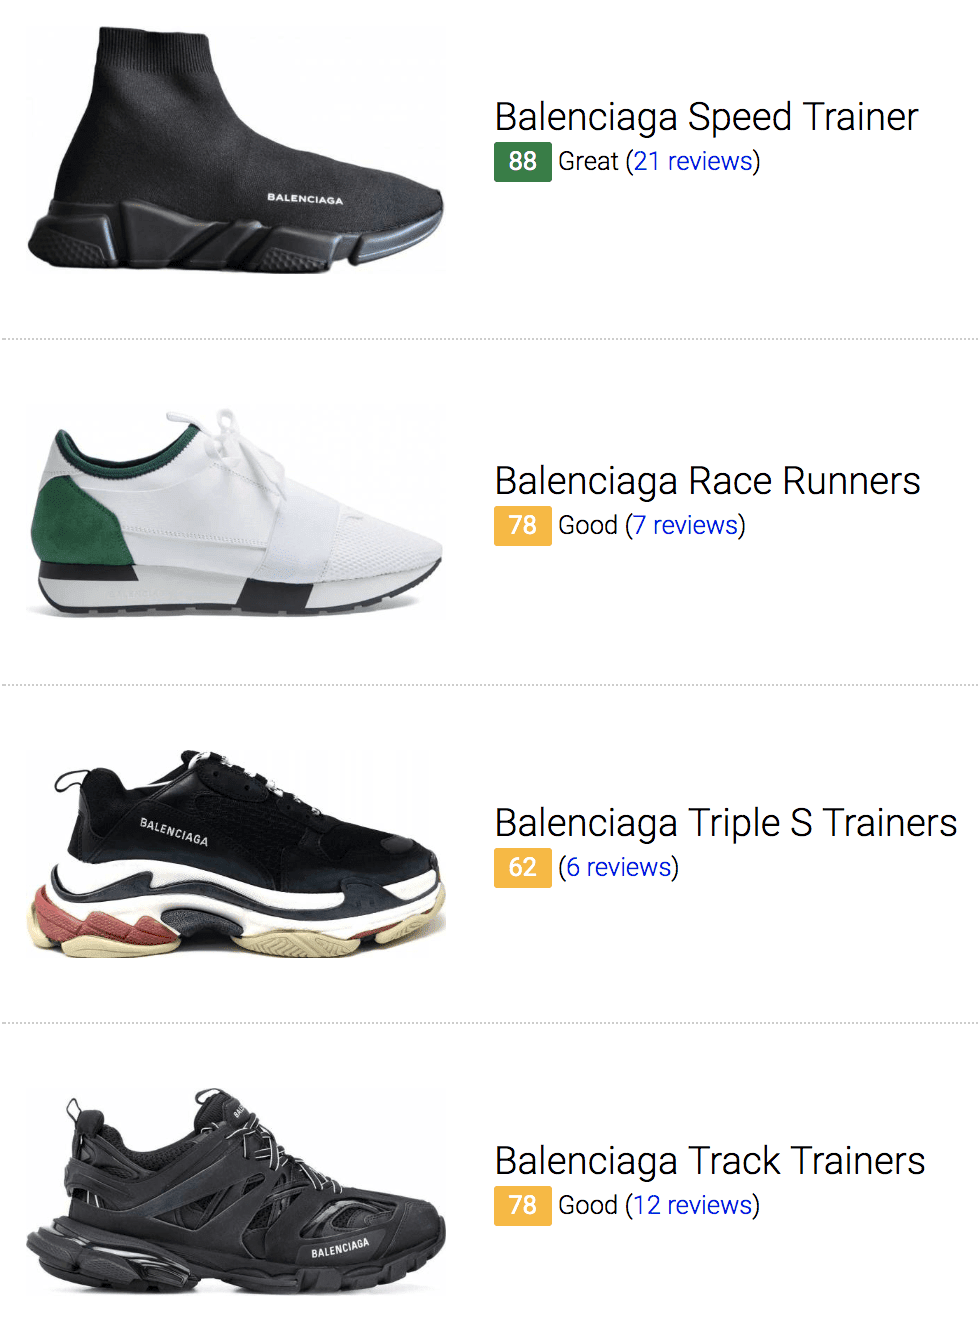 types of balenciaga shoes - 55% remise 